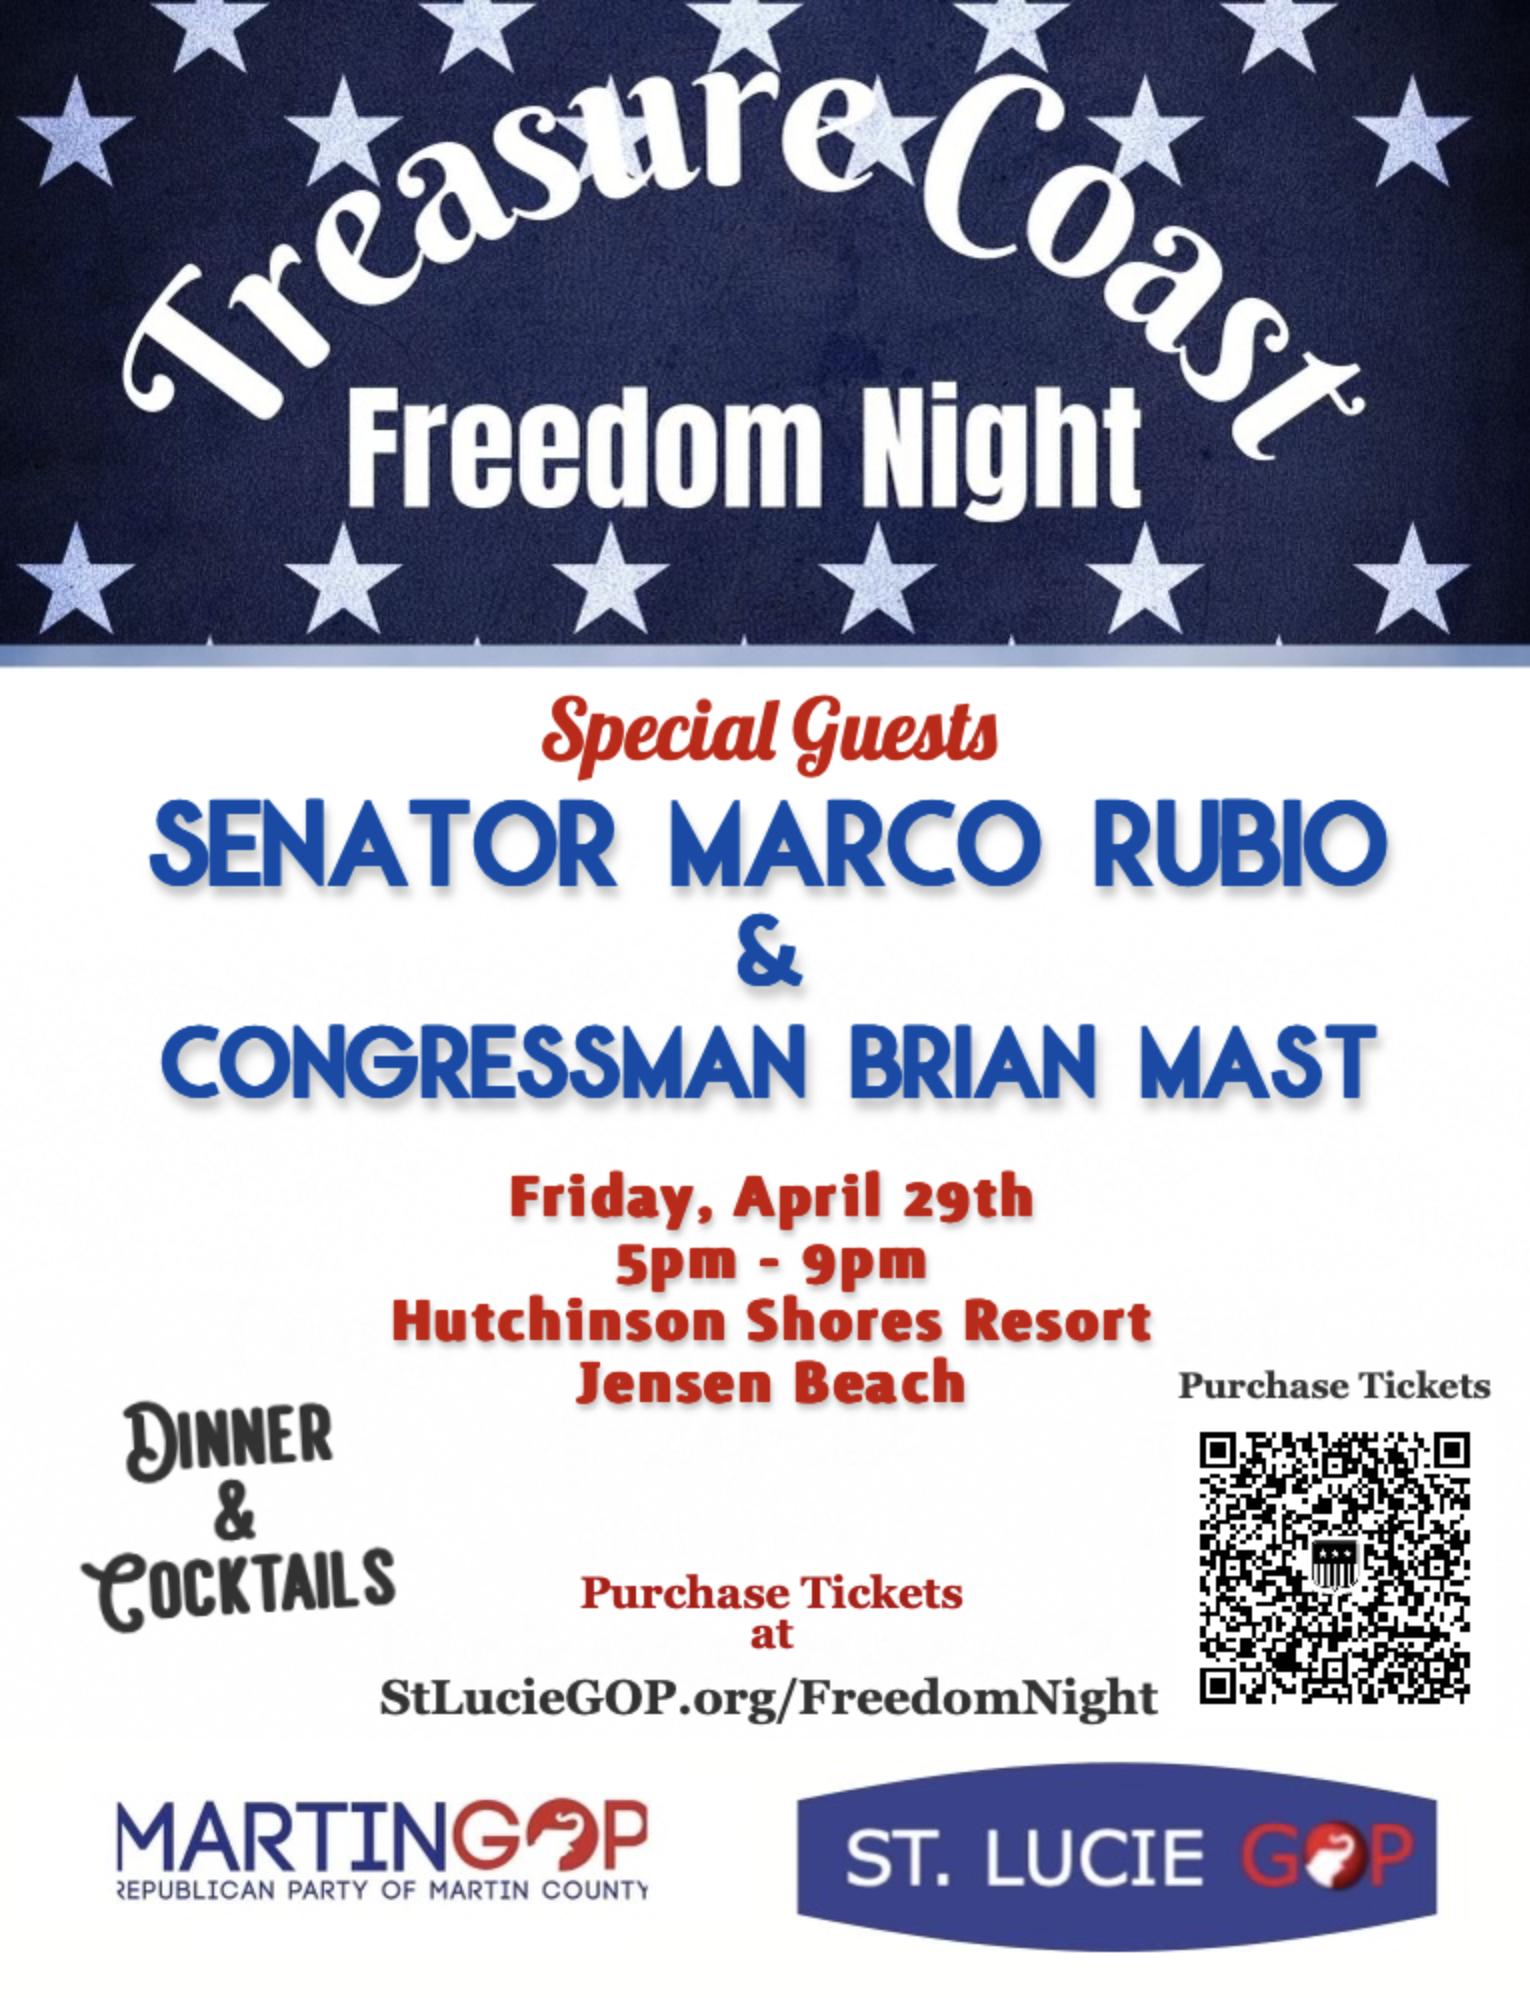 Treasure Coast Freedom Night Flyer